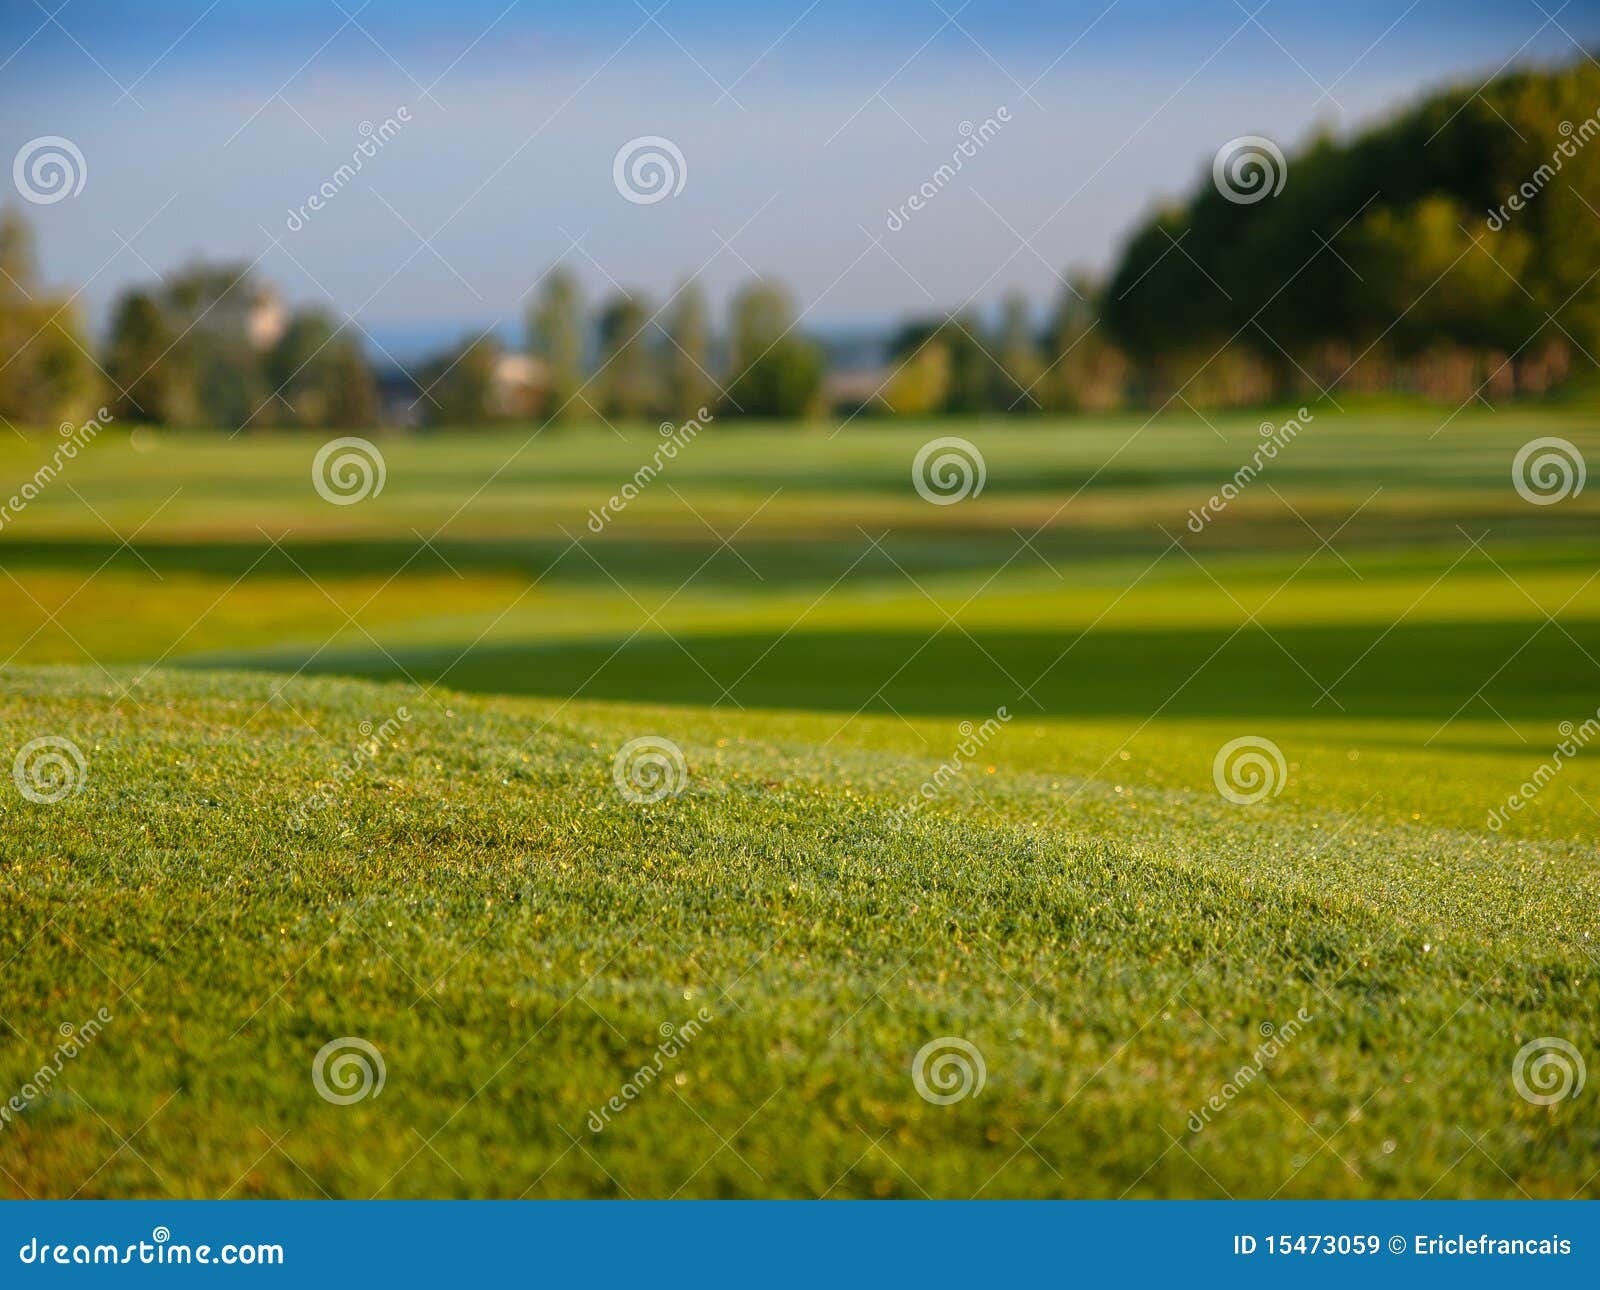 free clipart golf fairway - photo #28